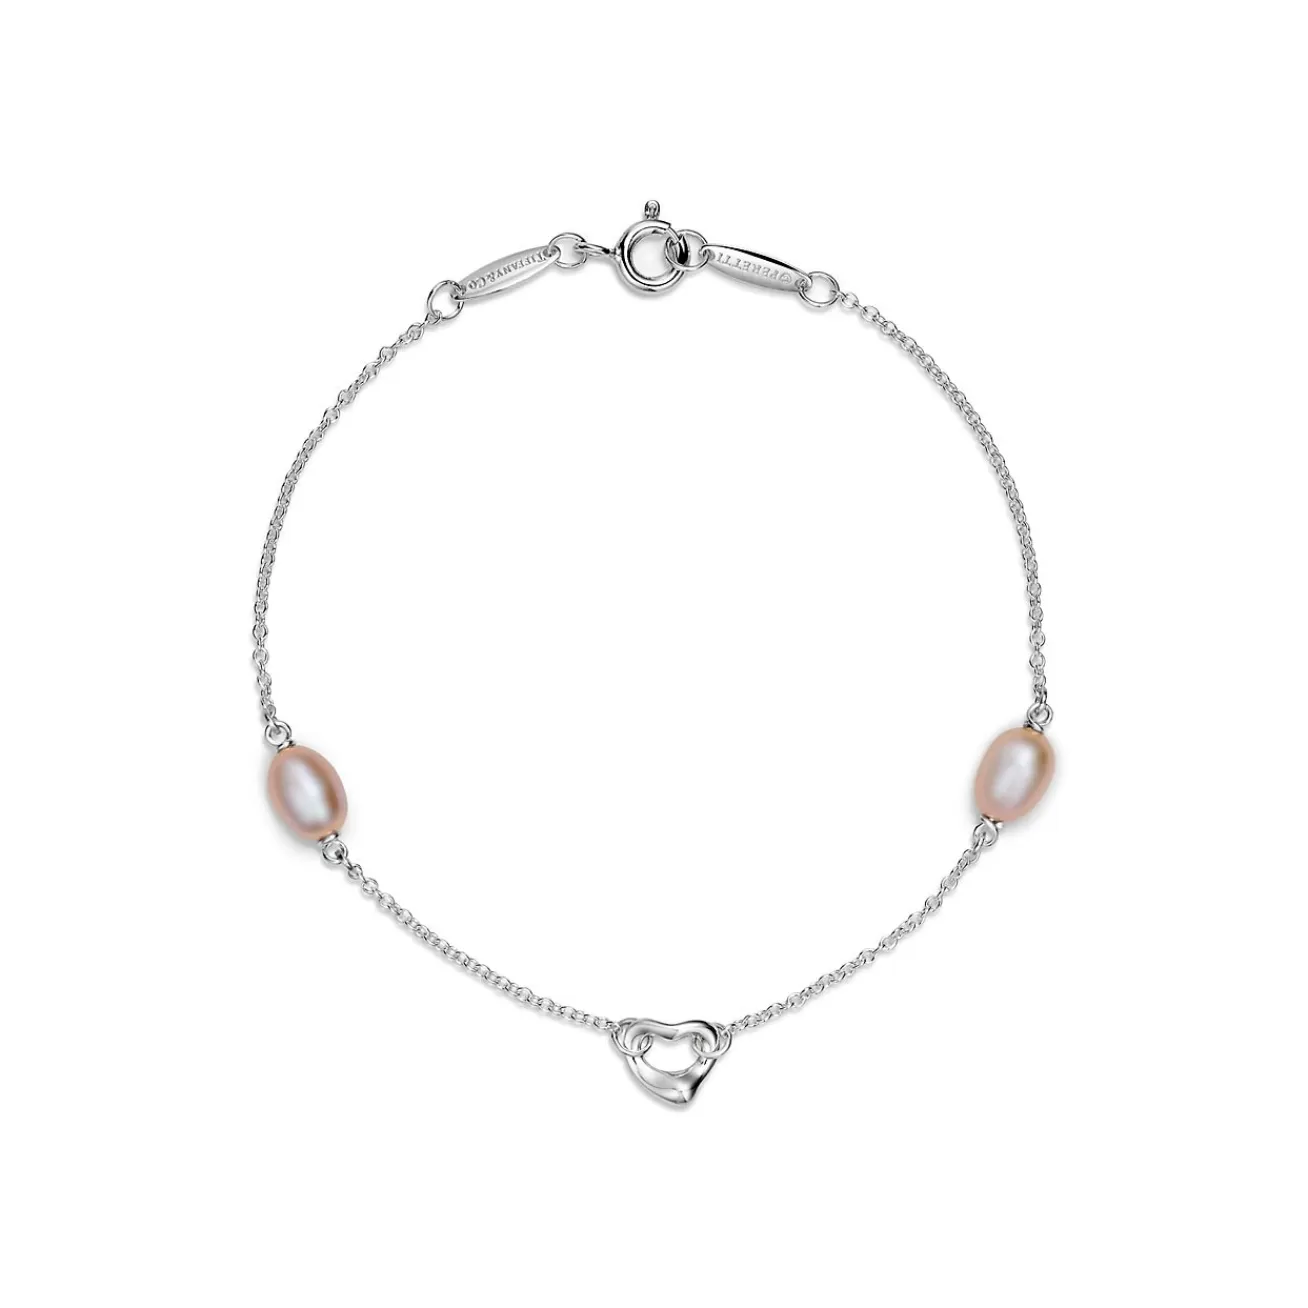 Tiffany & Co. Elsa Peretti® Pearls by the Yard™ Open Heart bracelet in silver with pearls. | ^ Bracelets | Sterling Silver Jewelry